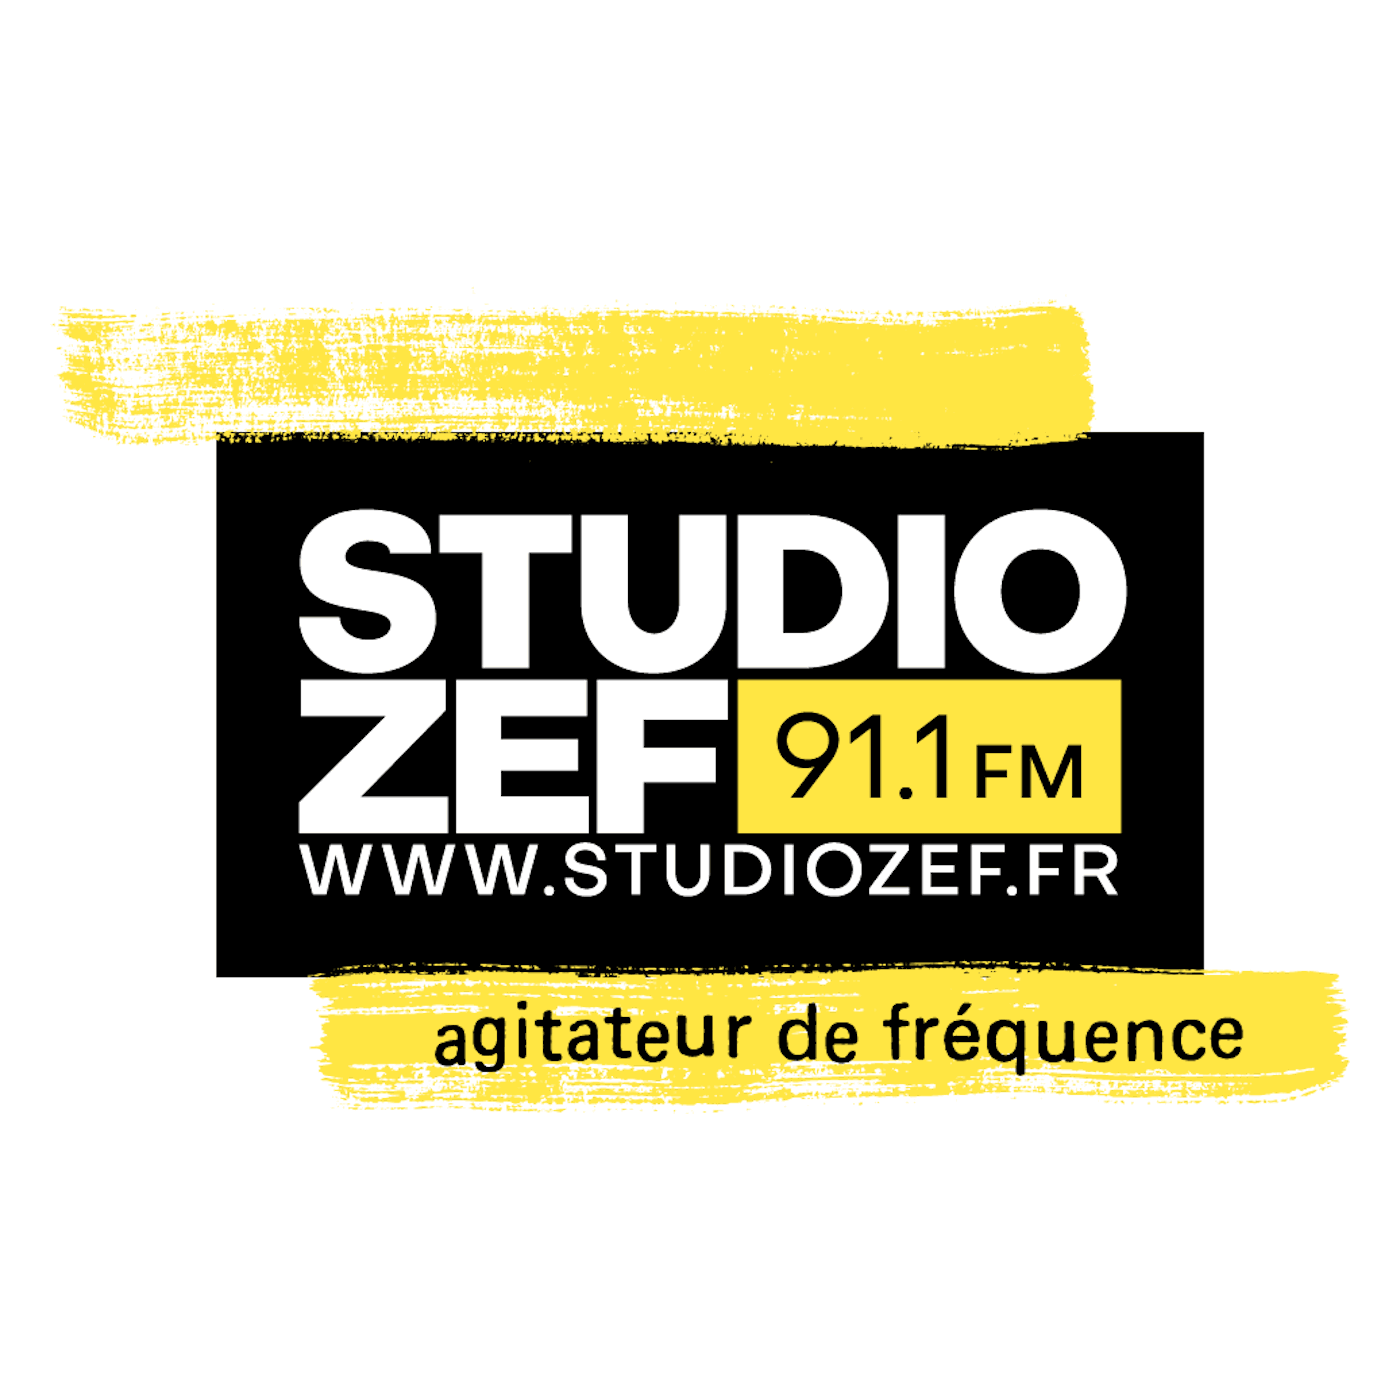 Tous au poste! | Studio Zef